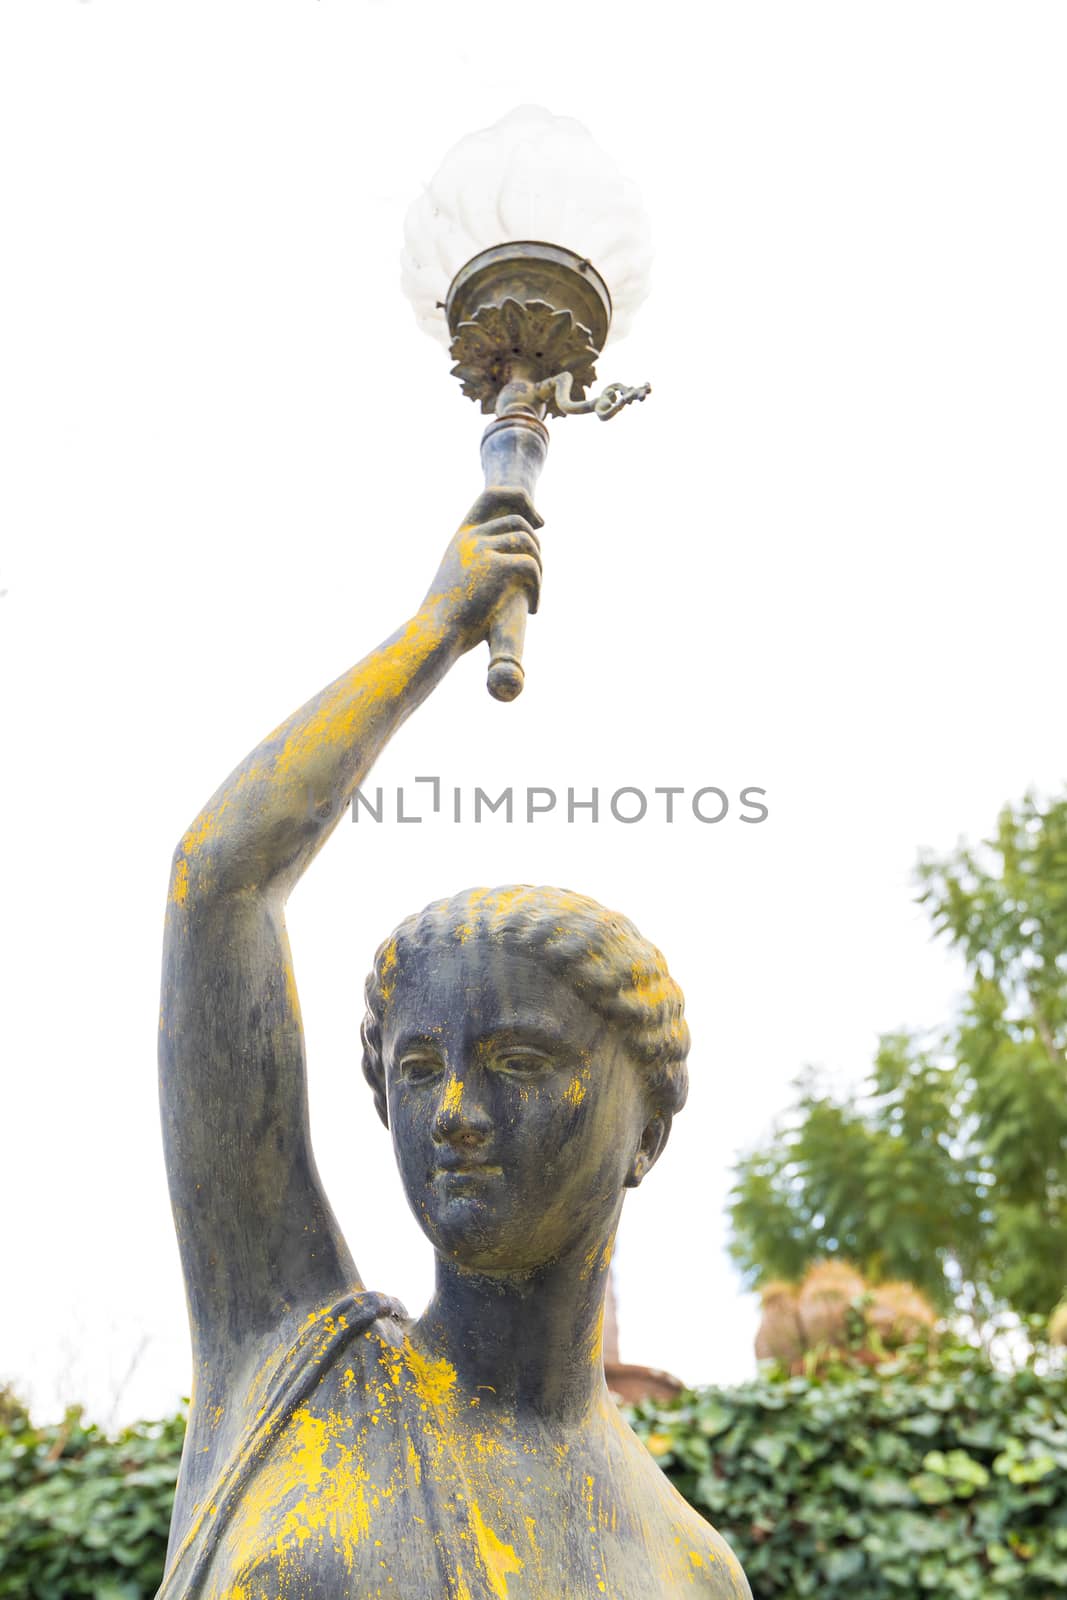 Lady bronze statue by noimagination